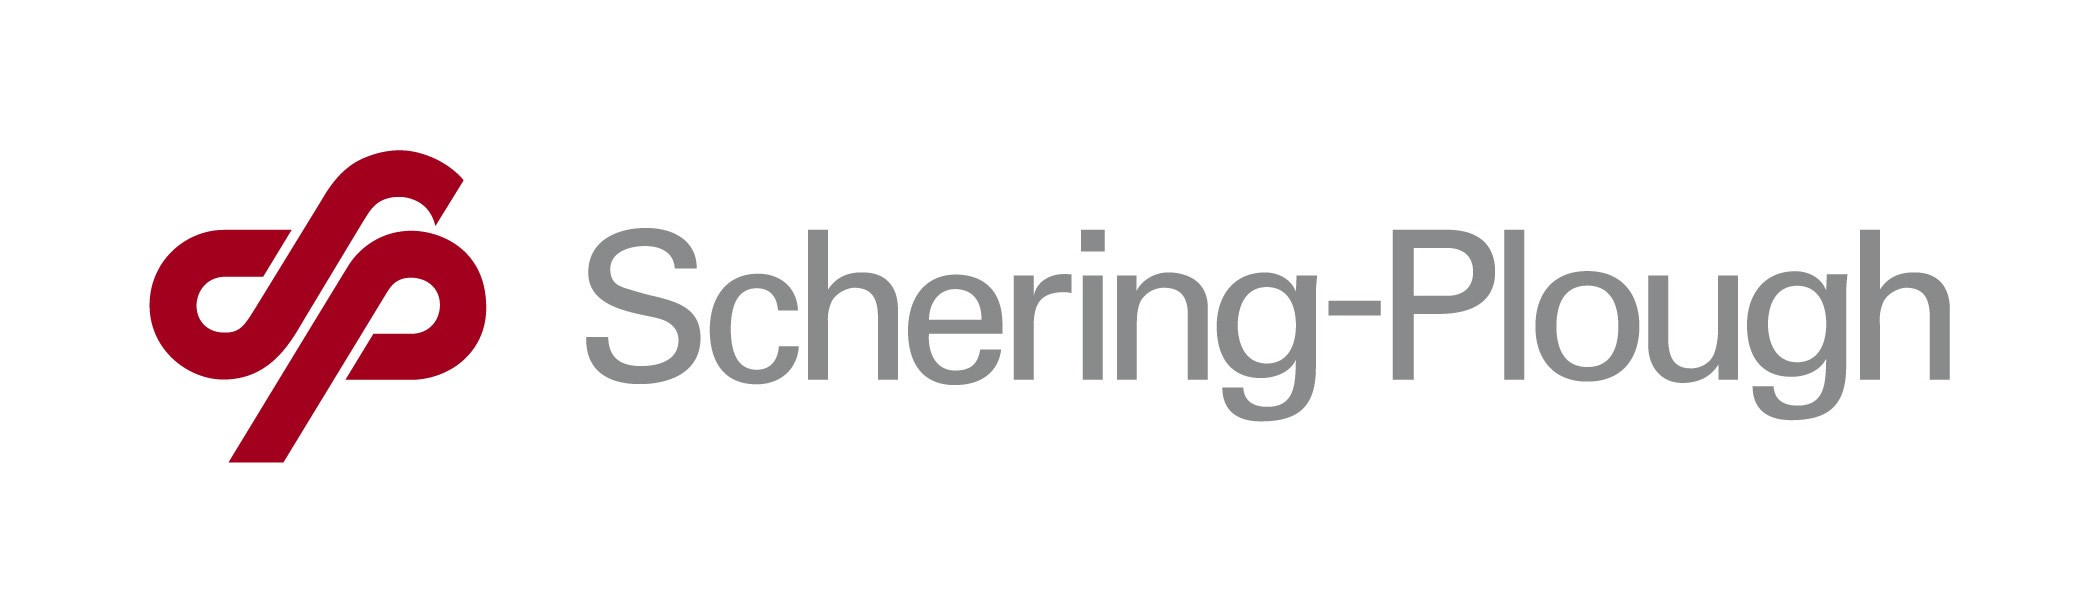 Logo_Schering-Plough.jpg